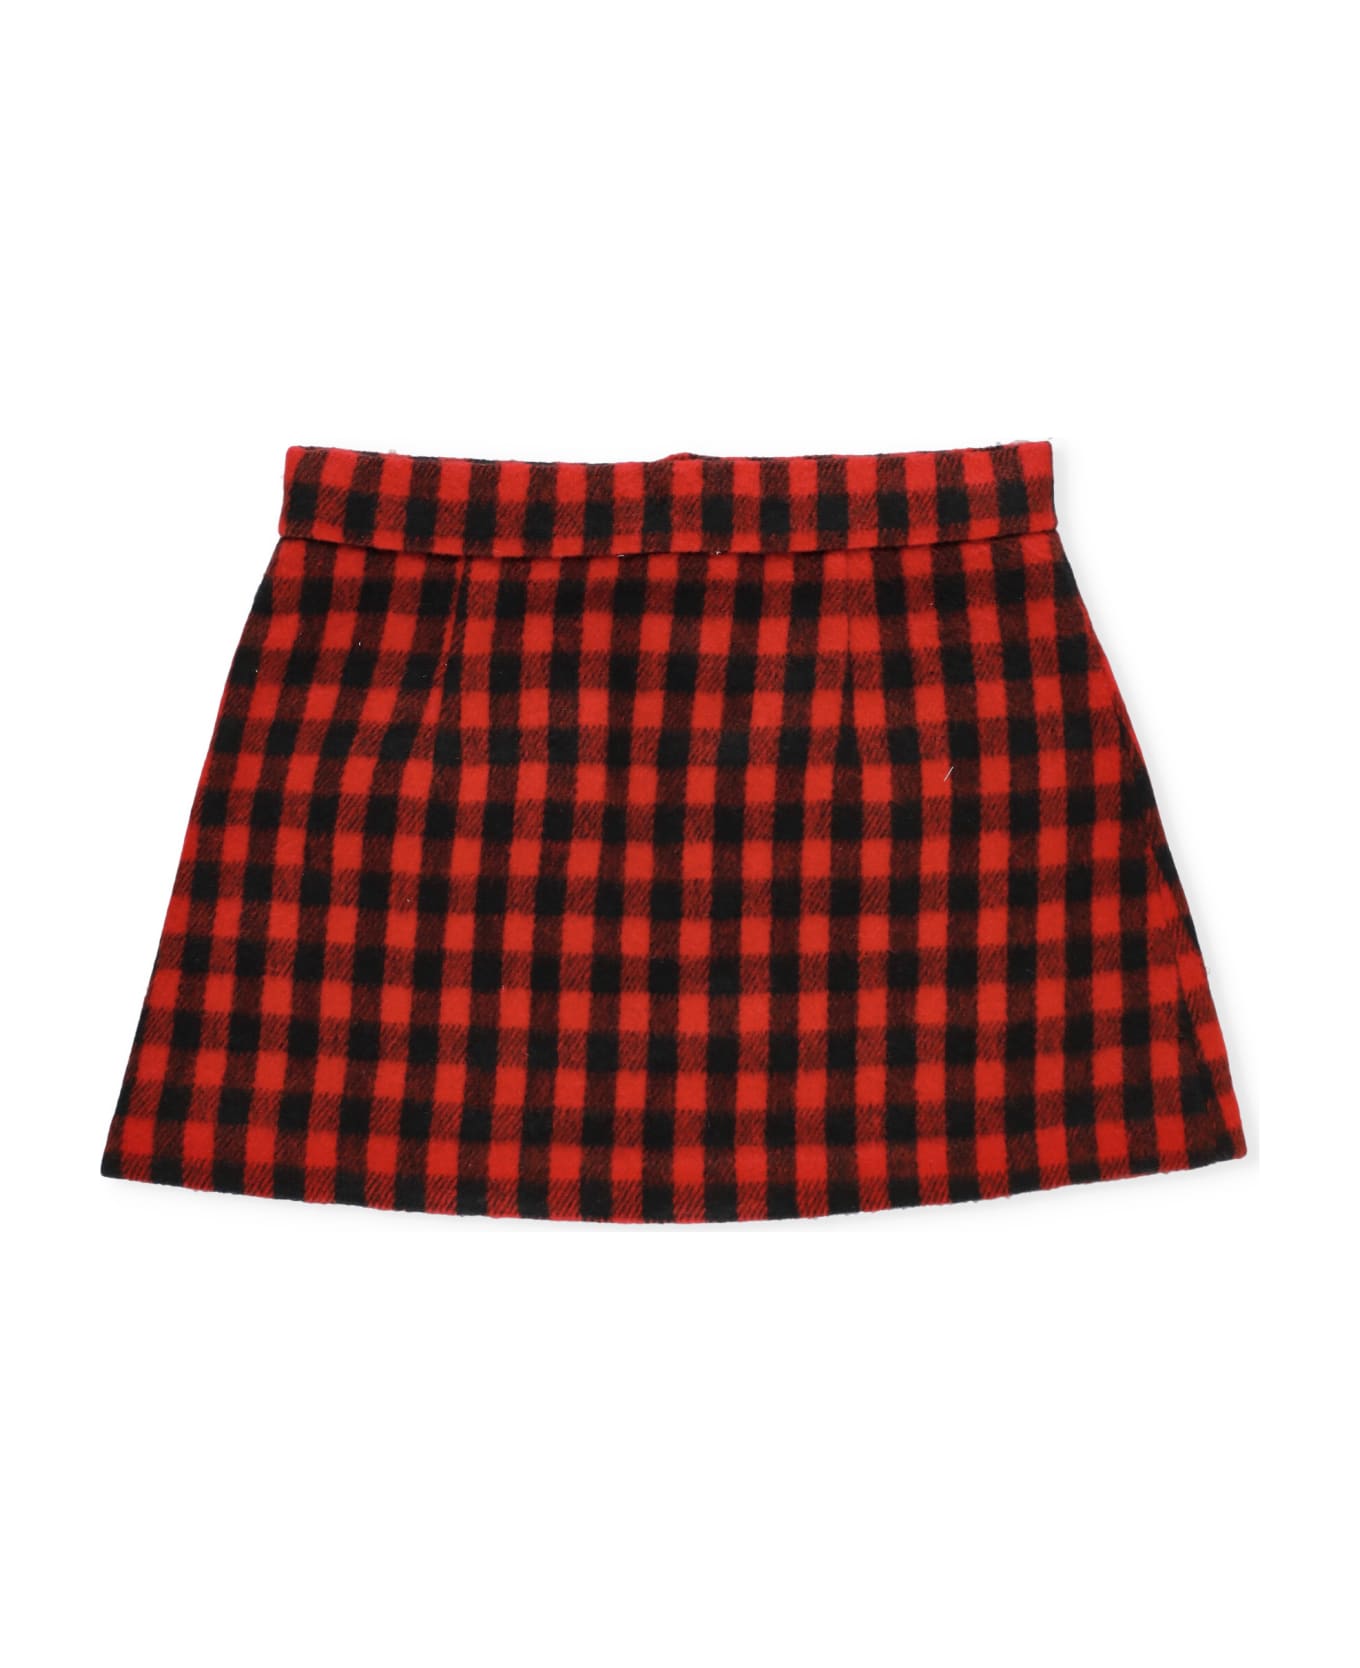 N.21 Wool Blend Skirt - Red ボトムス